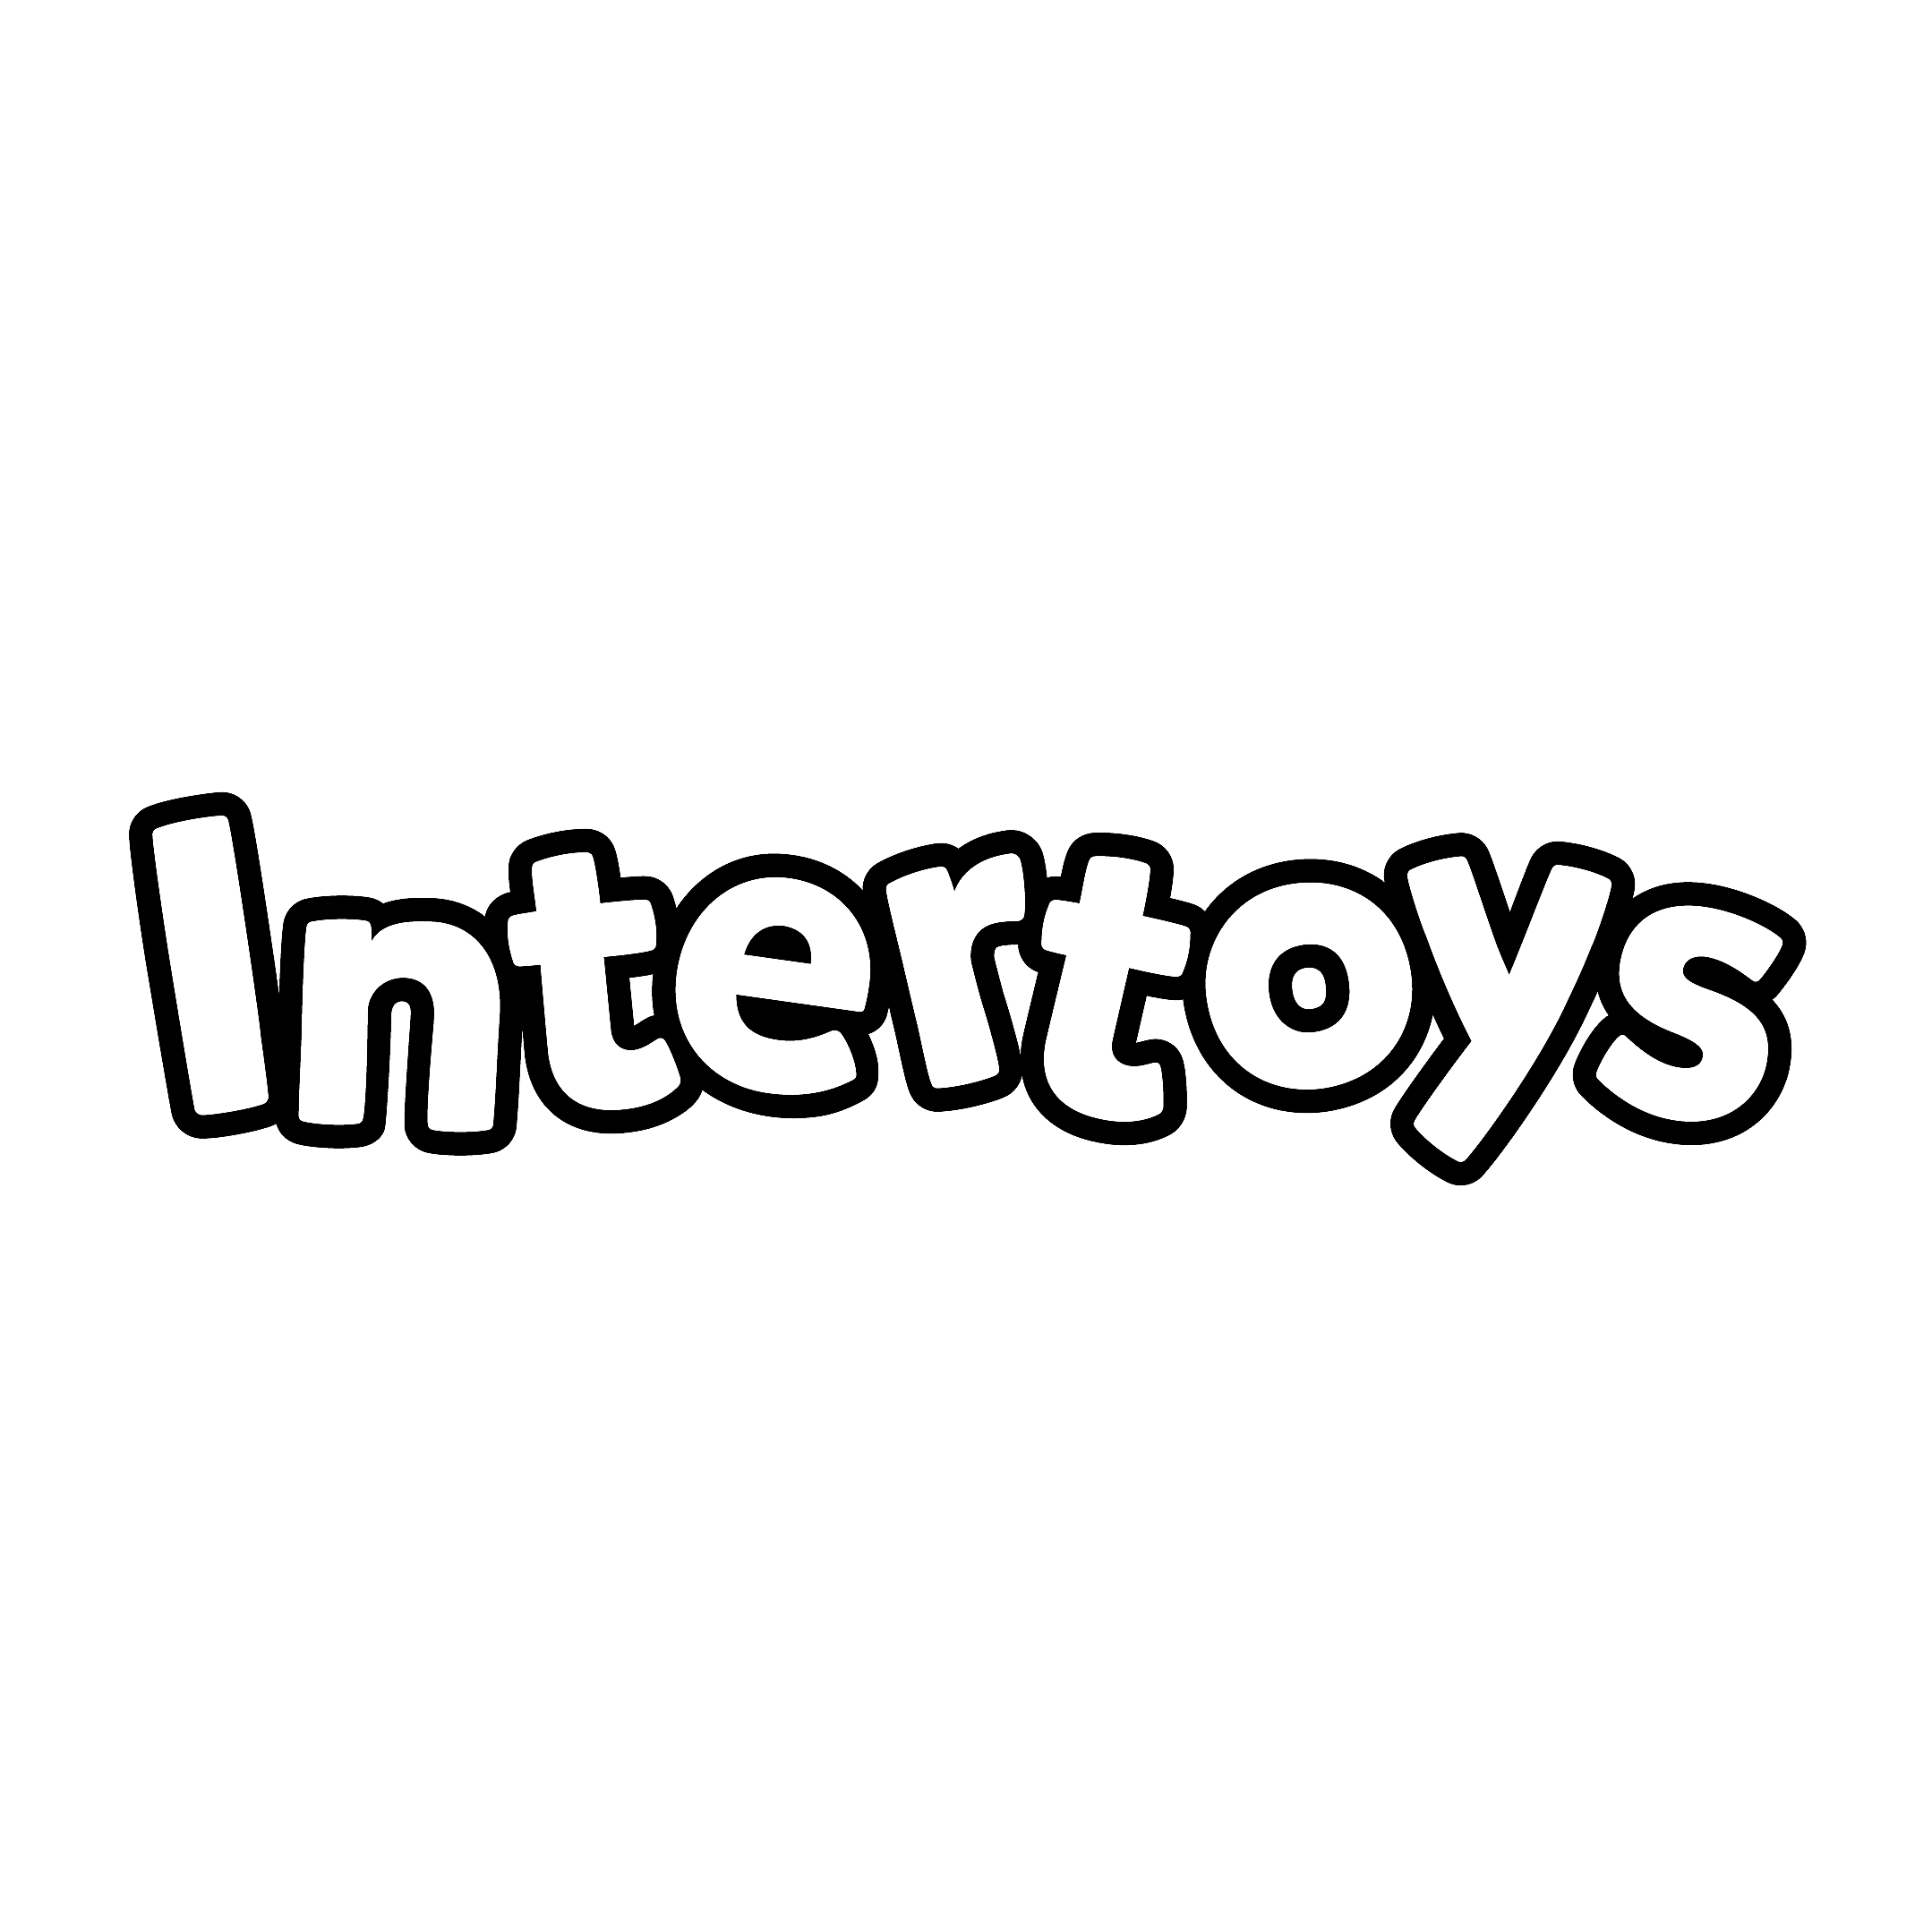 Intertoys